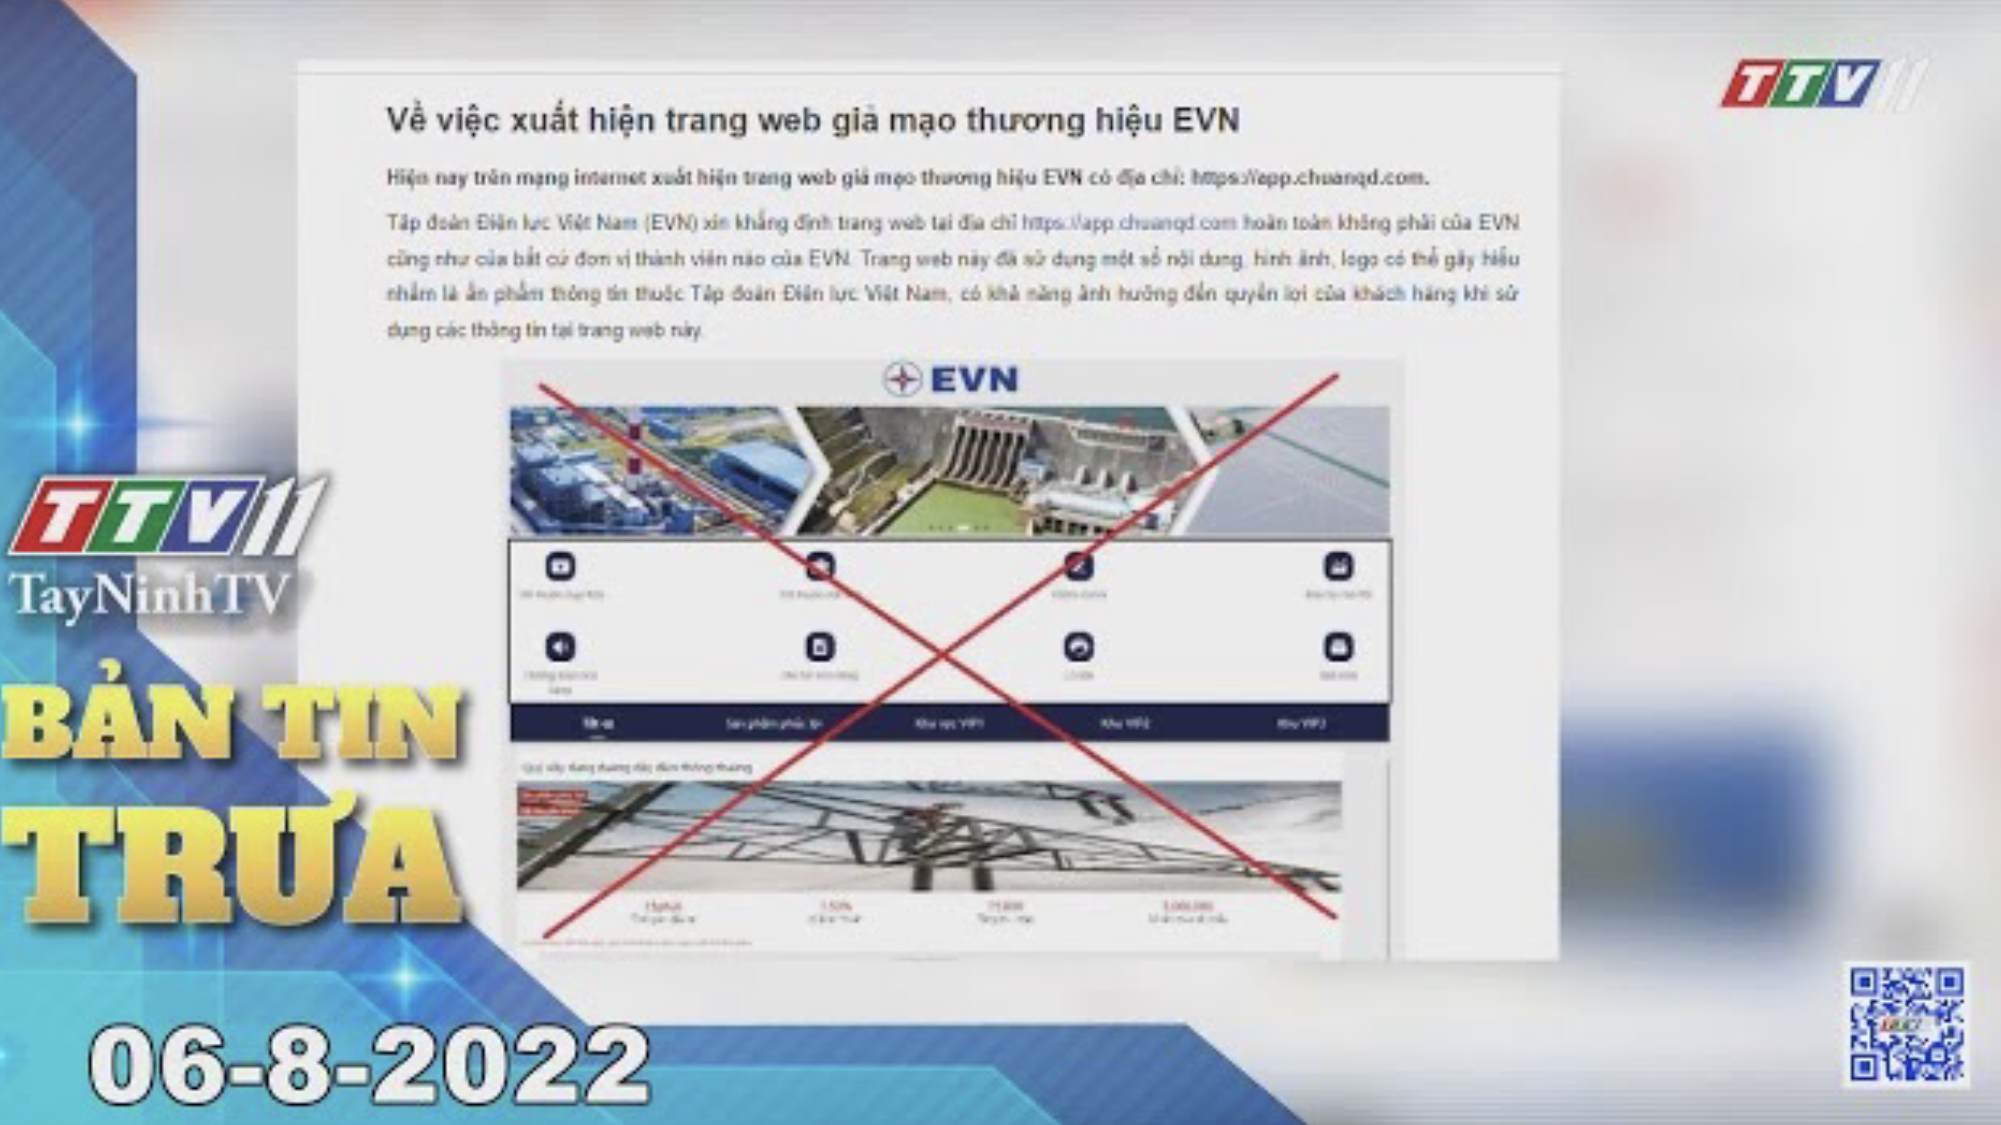 Bản tin trưa 06-8-2022 | Tin tức hôm nay | TayNinhTV